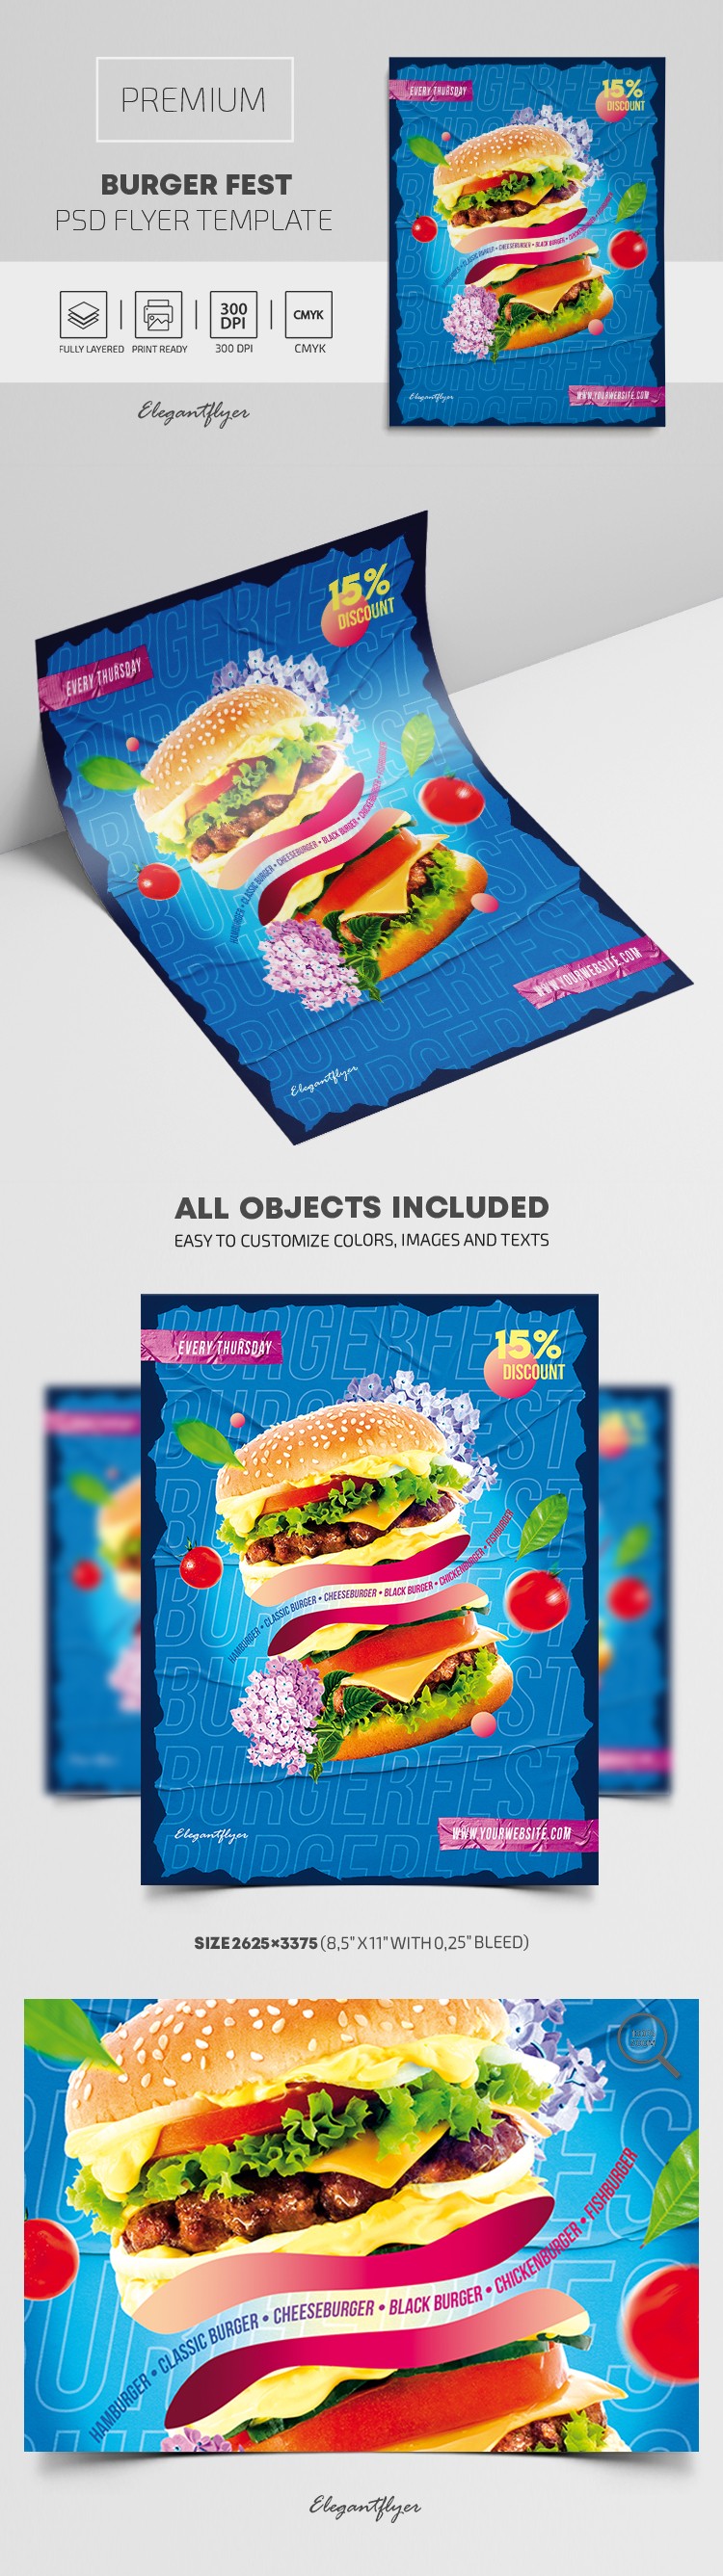 Burger Fest Flyer by ElegantFlyer